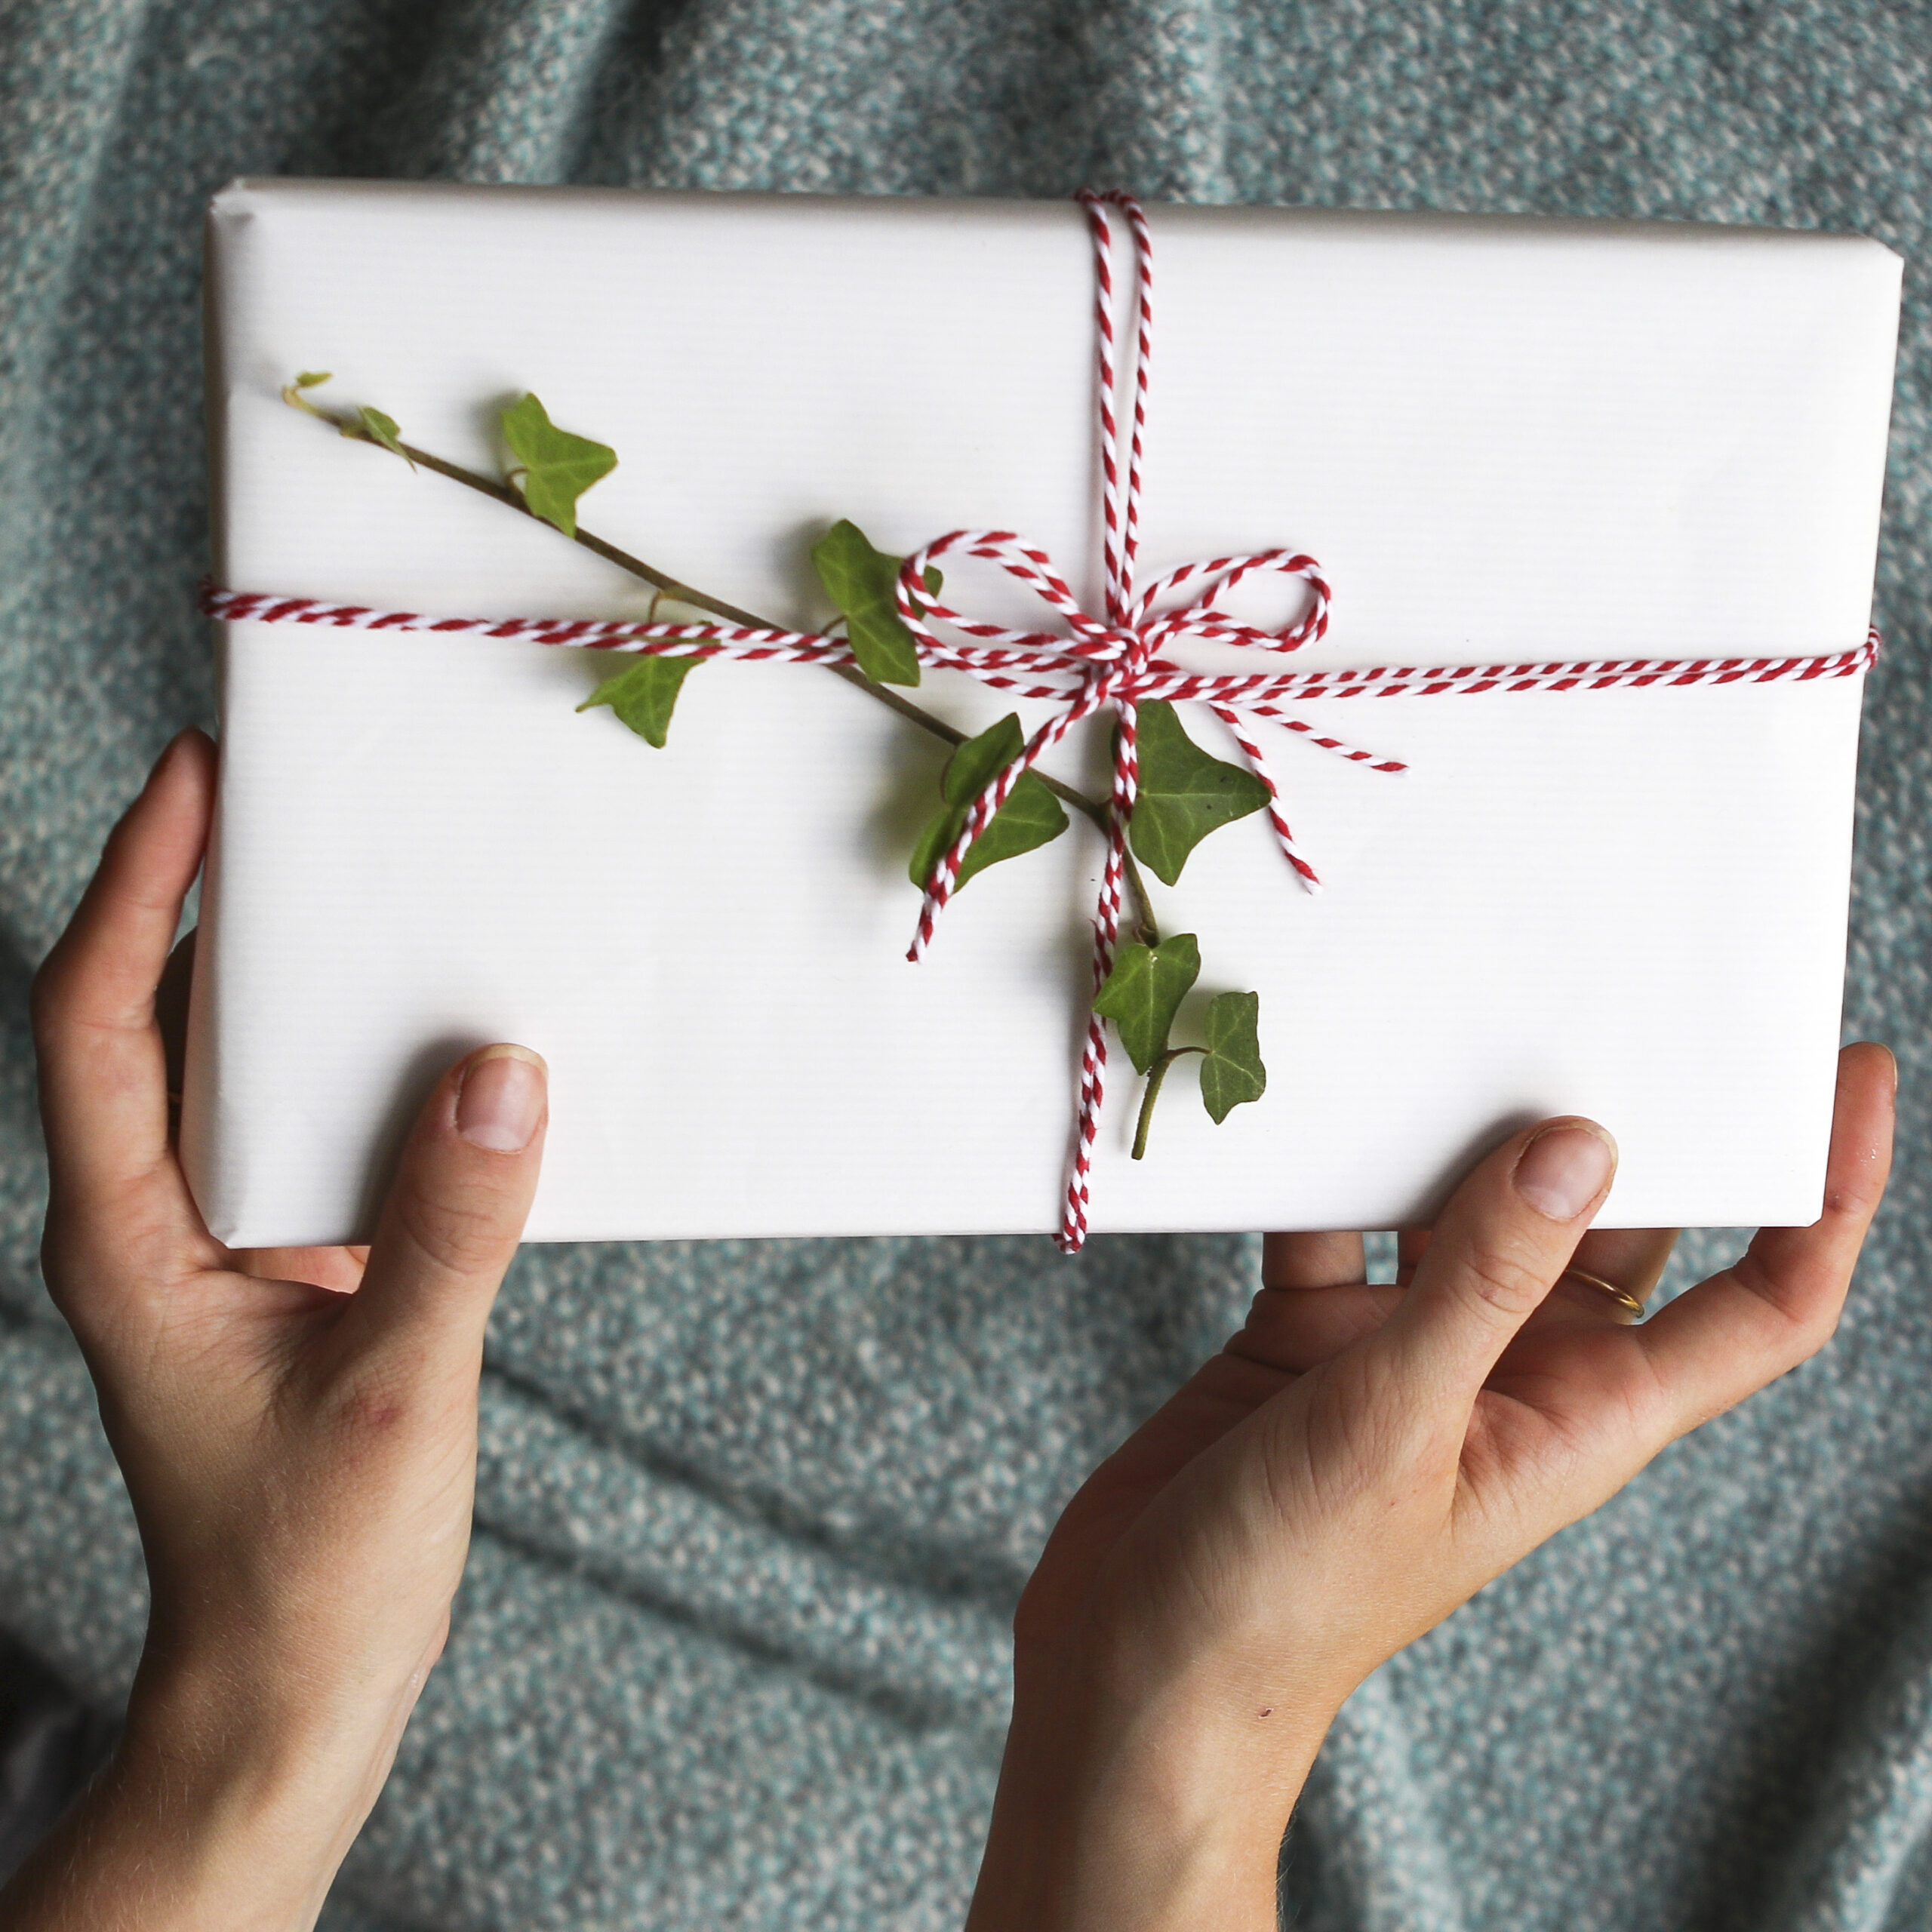 How To Festive Eco-Friendly Gift Wrap The StephieAnn Way: